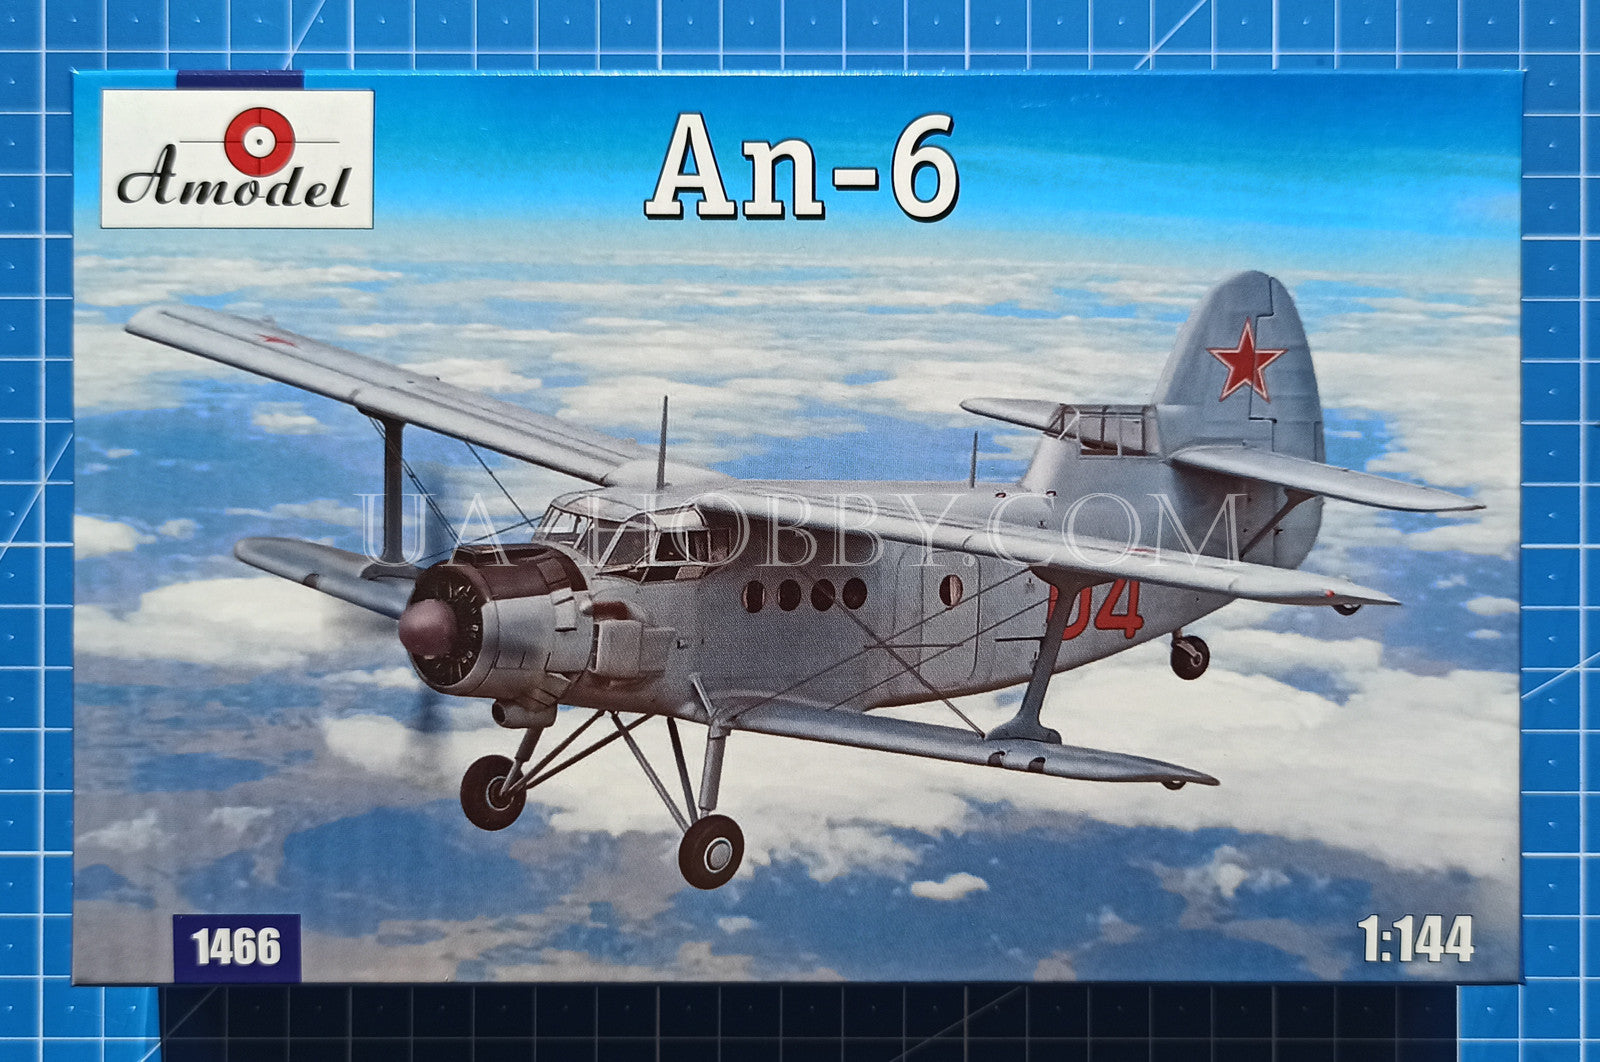 1/144 Antonov An-6. Amodel 1466